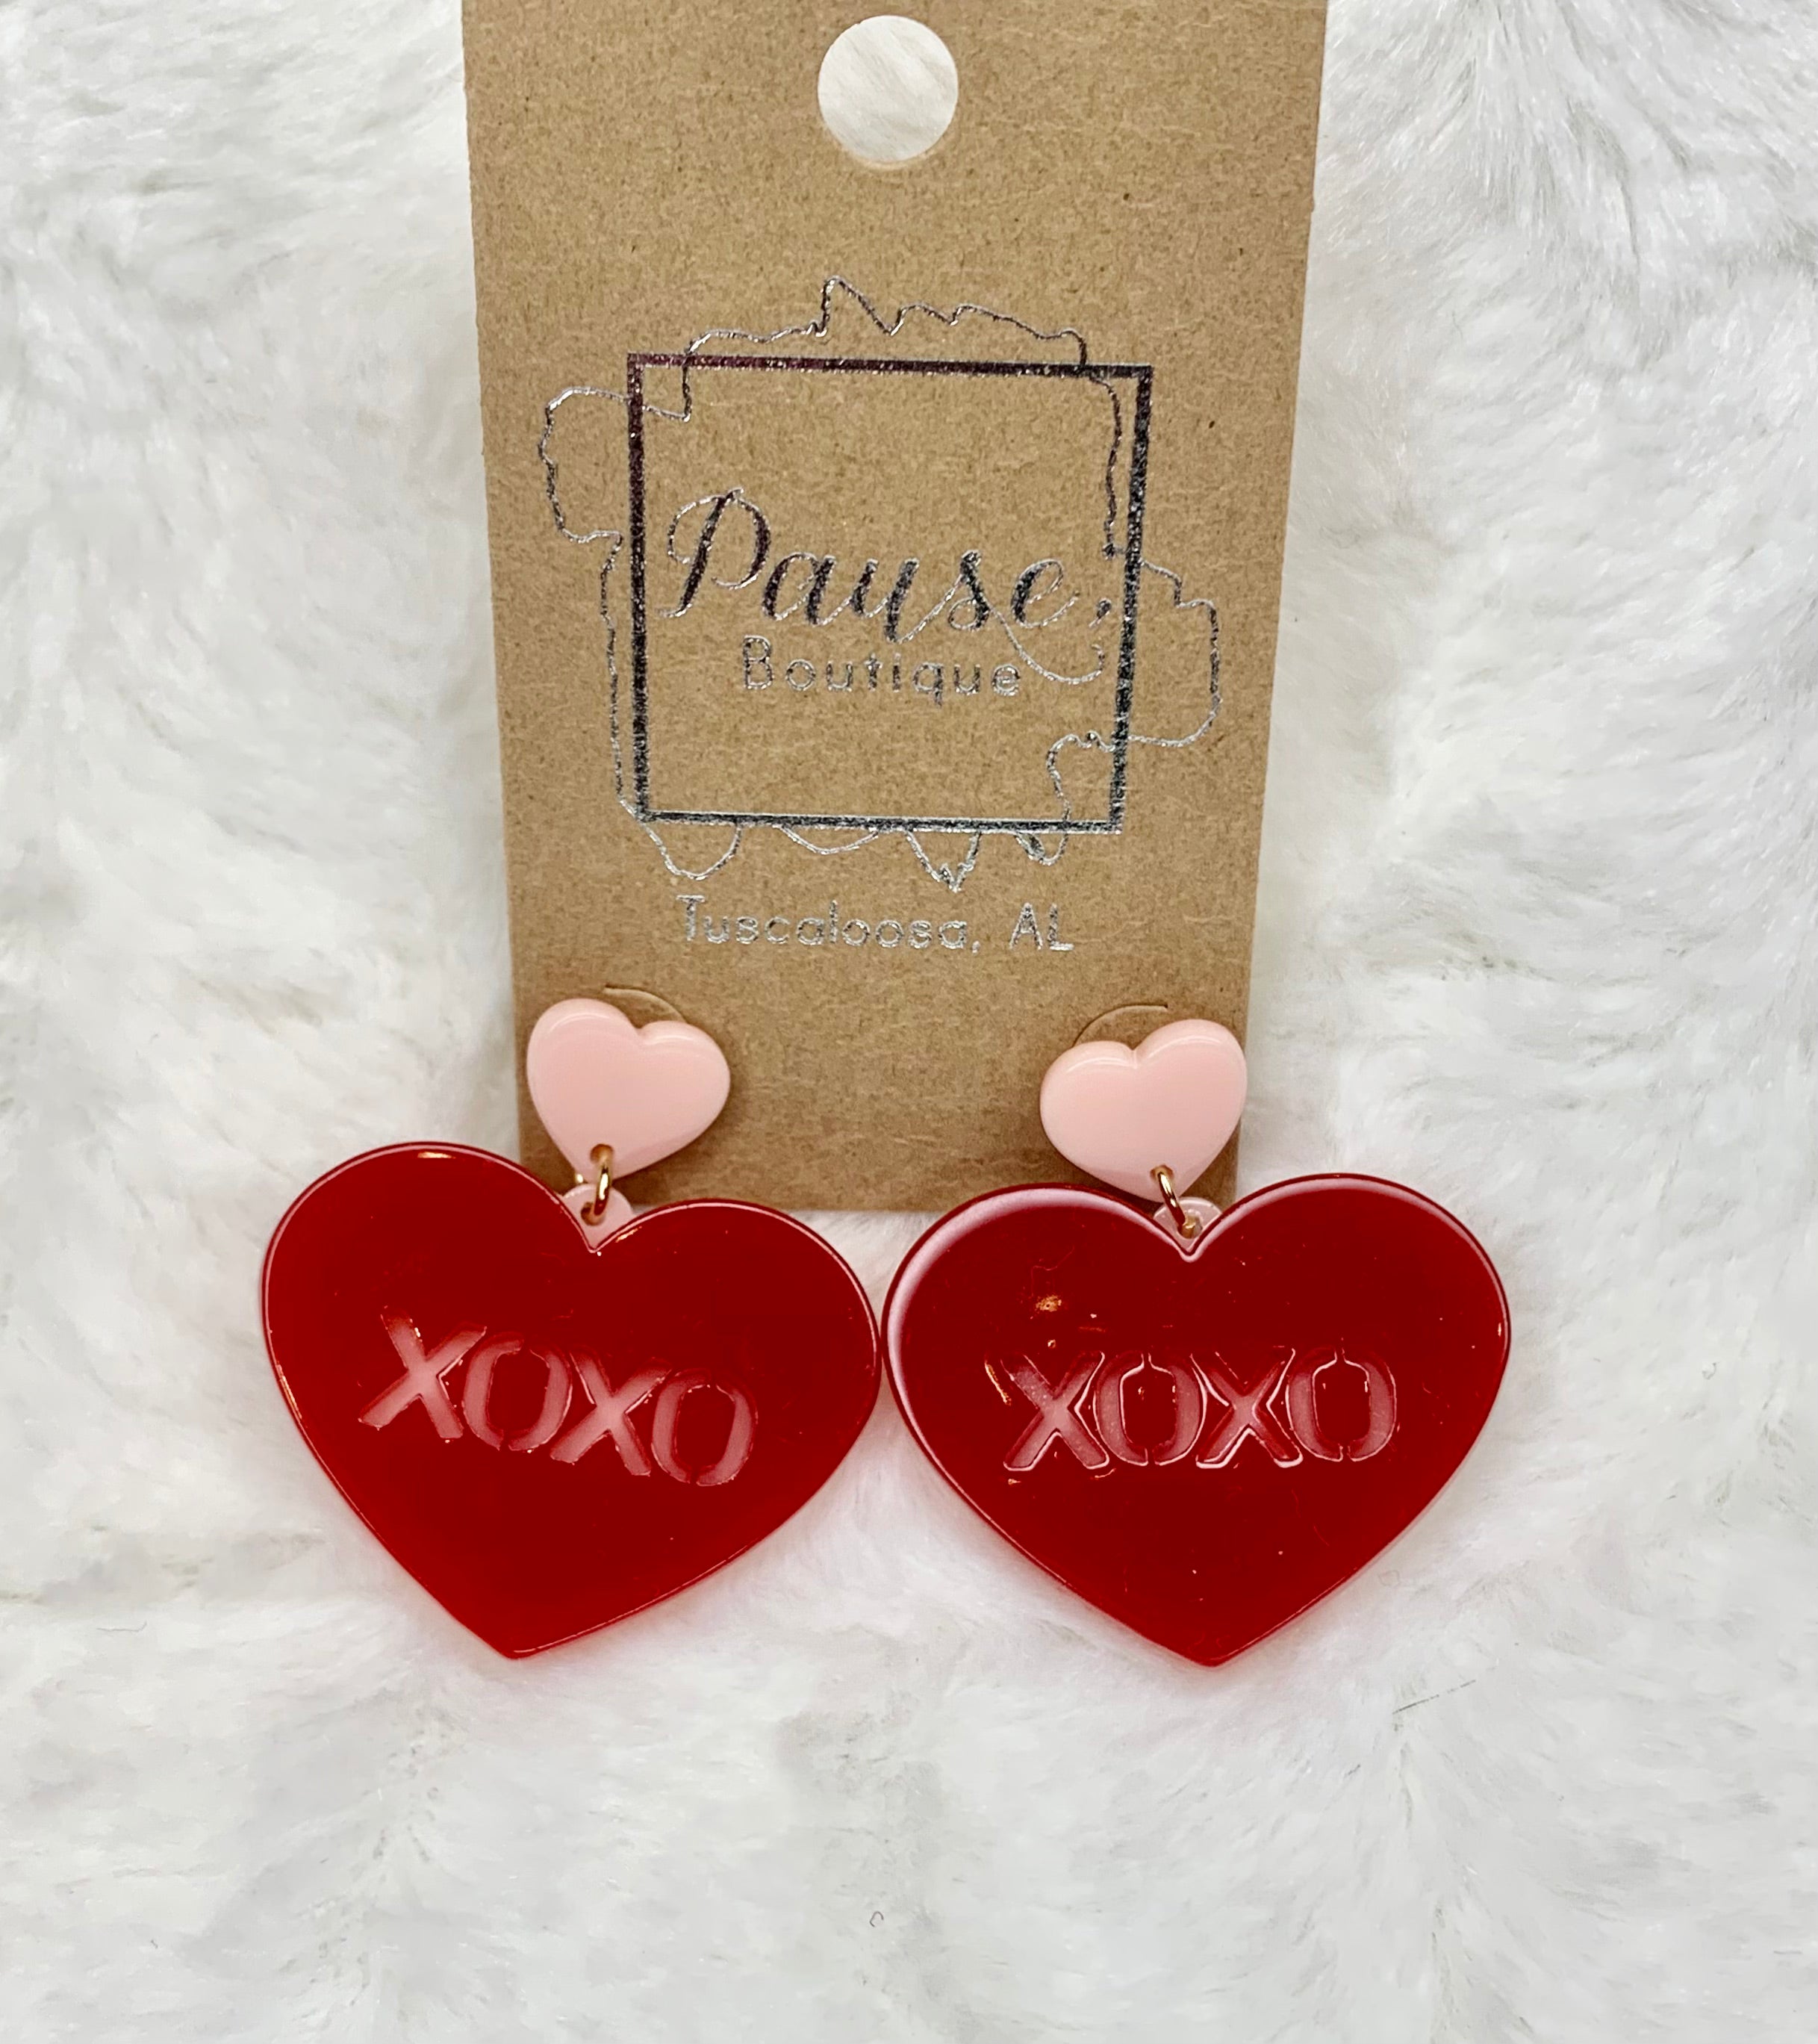 XOXO heart drop earrings